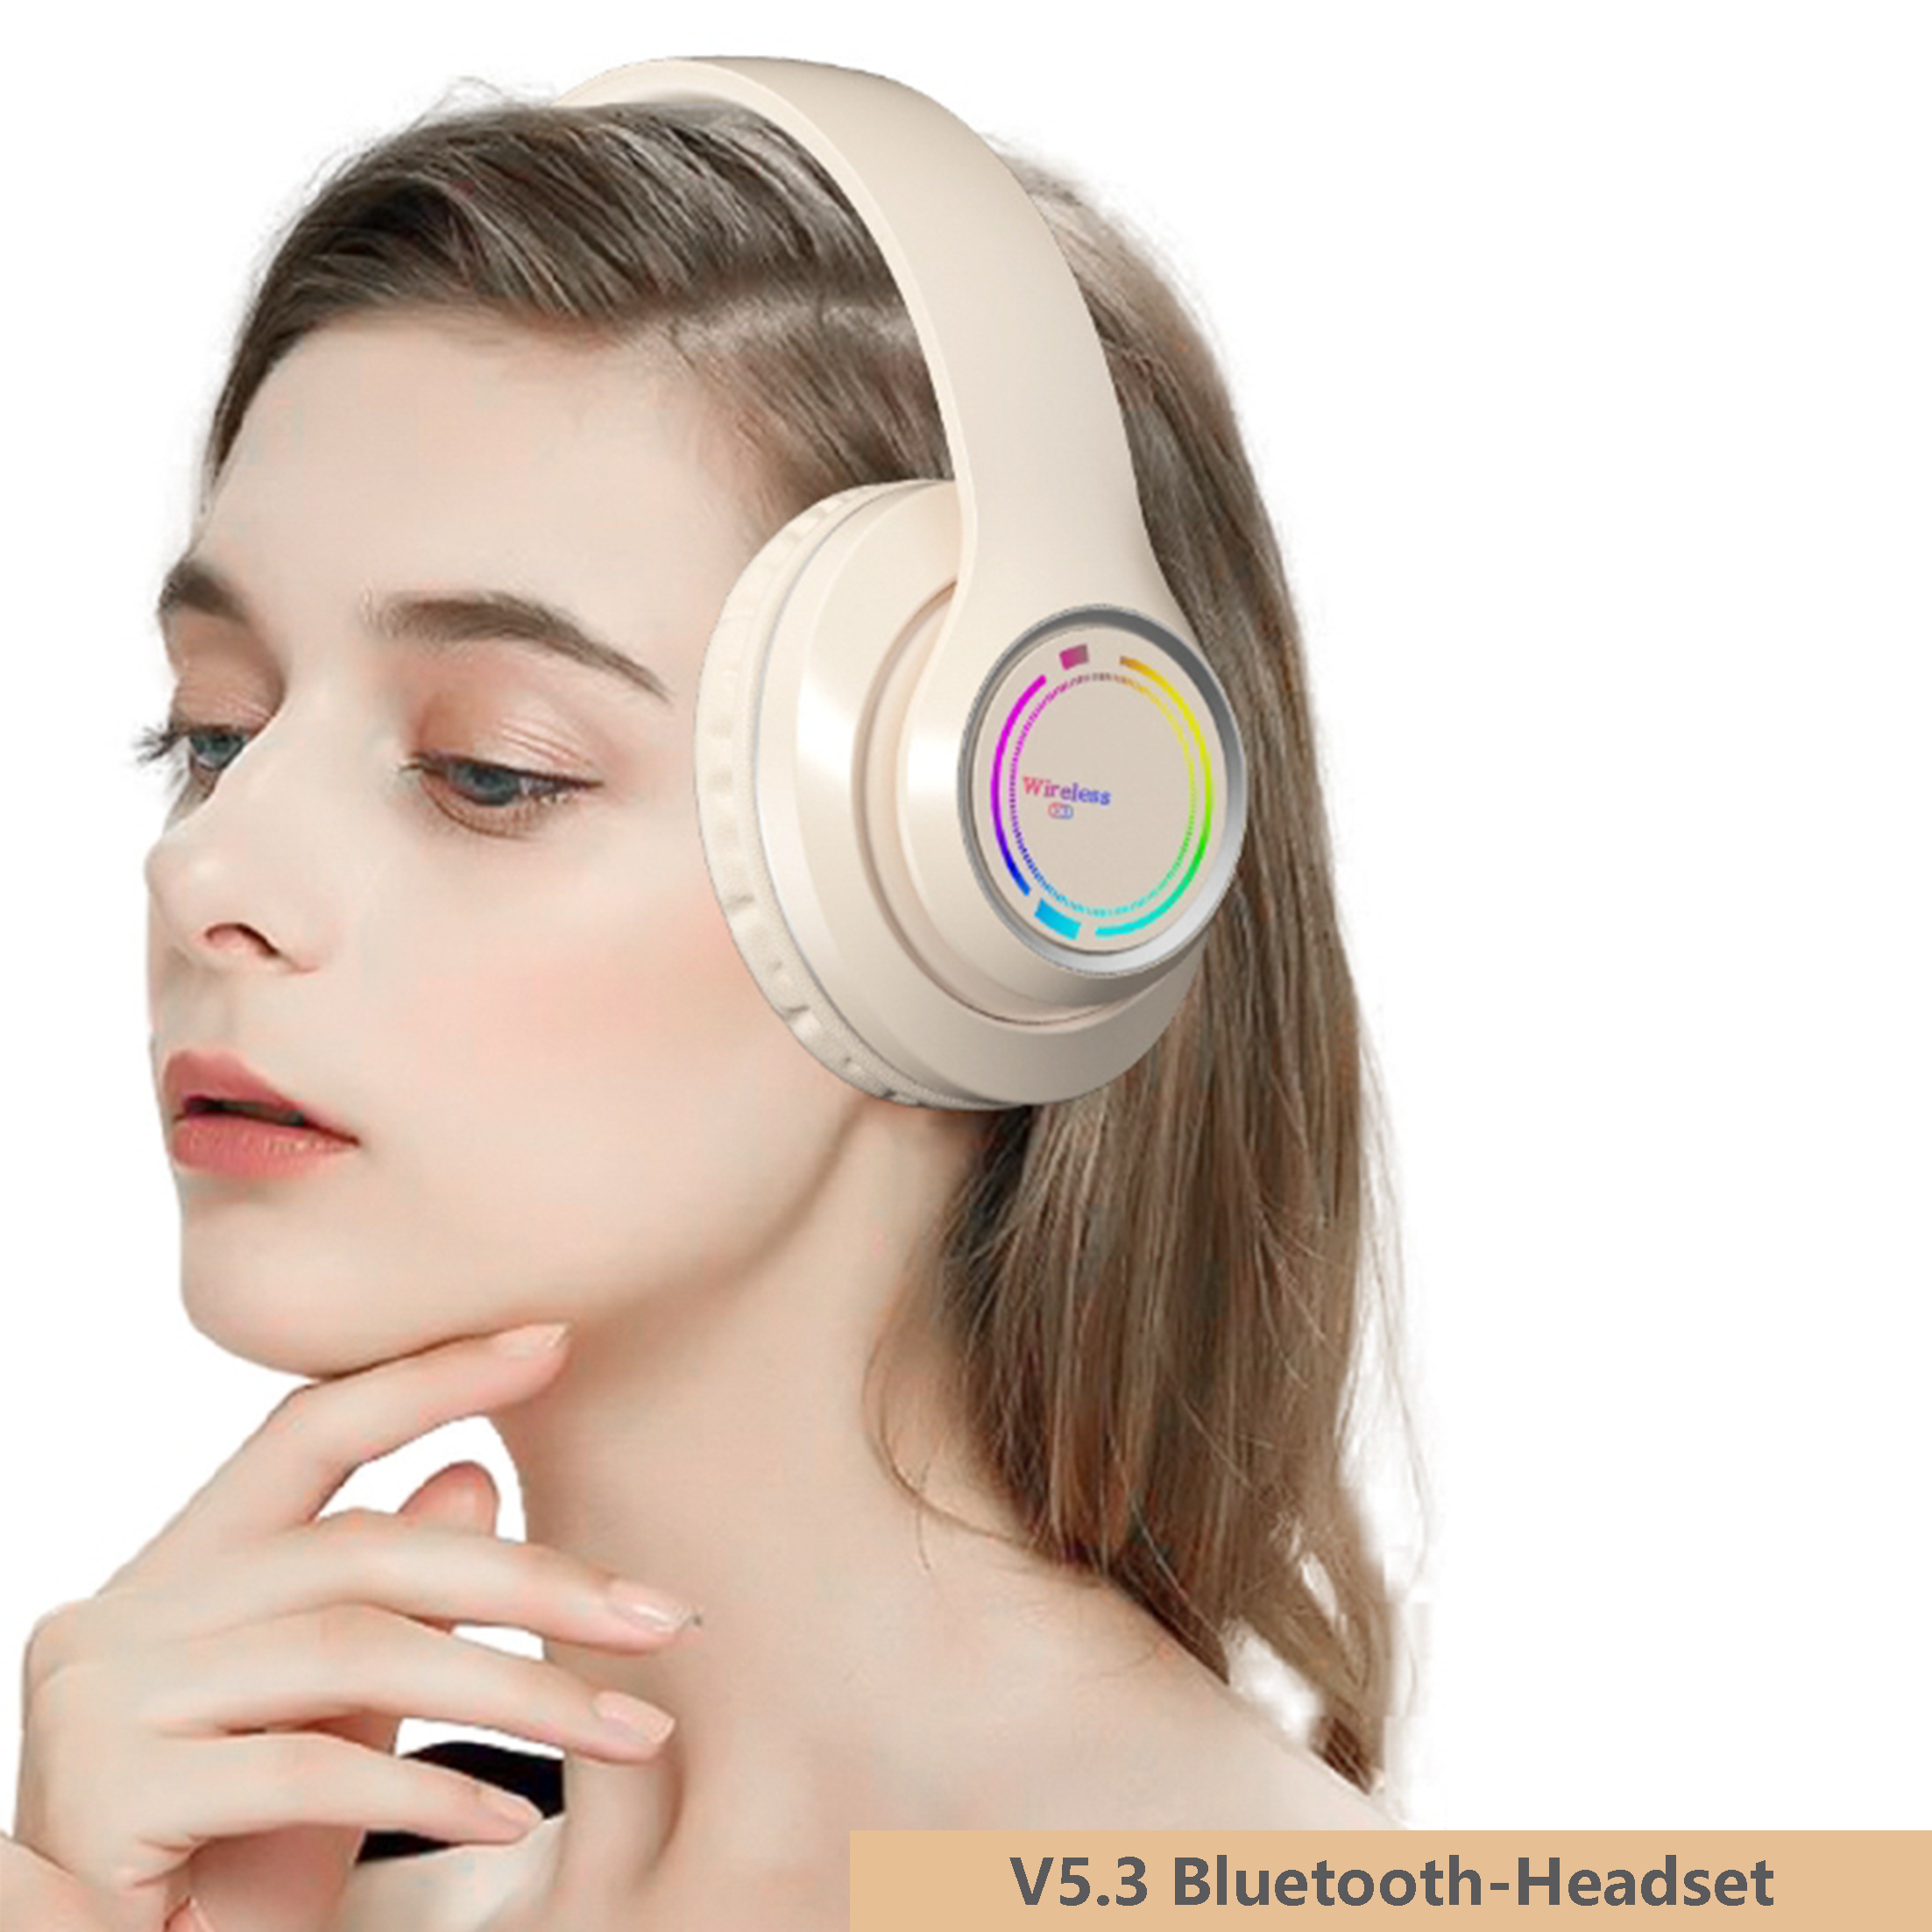 Kopfhörer KINSI Drahtlos,Spiele,RGB, Rosa V3 Bluetooth Over-ear